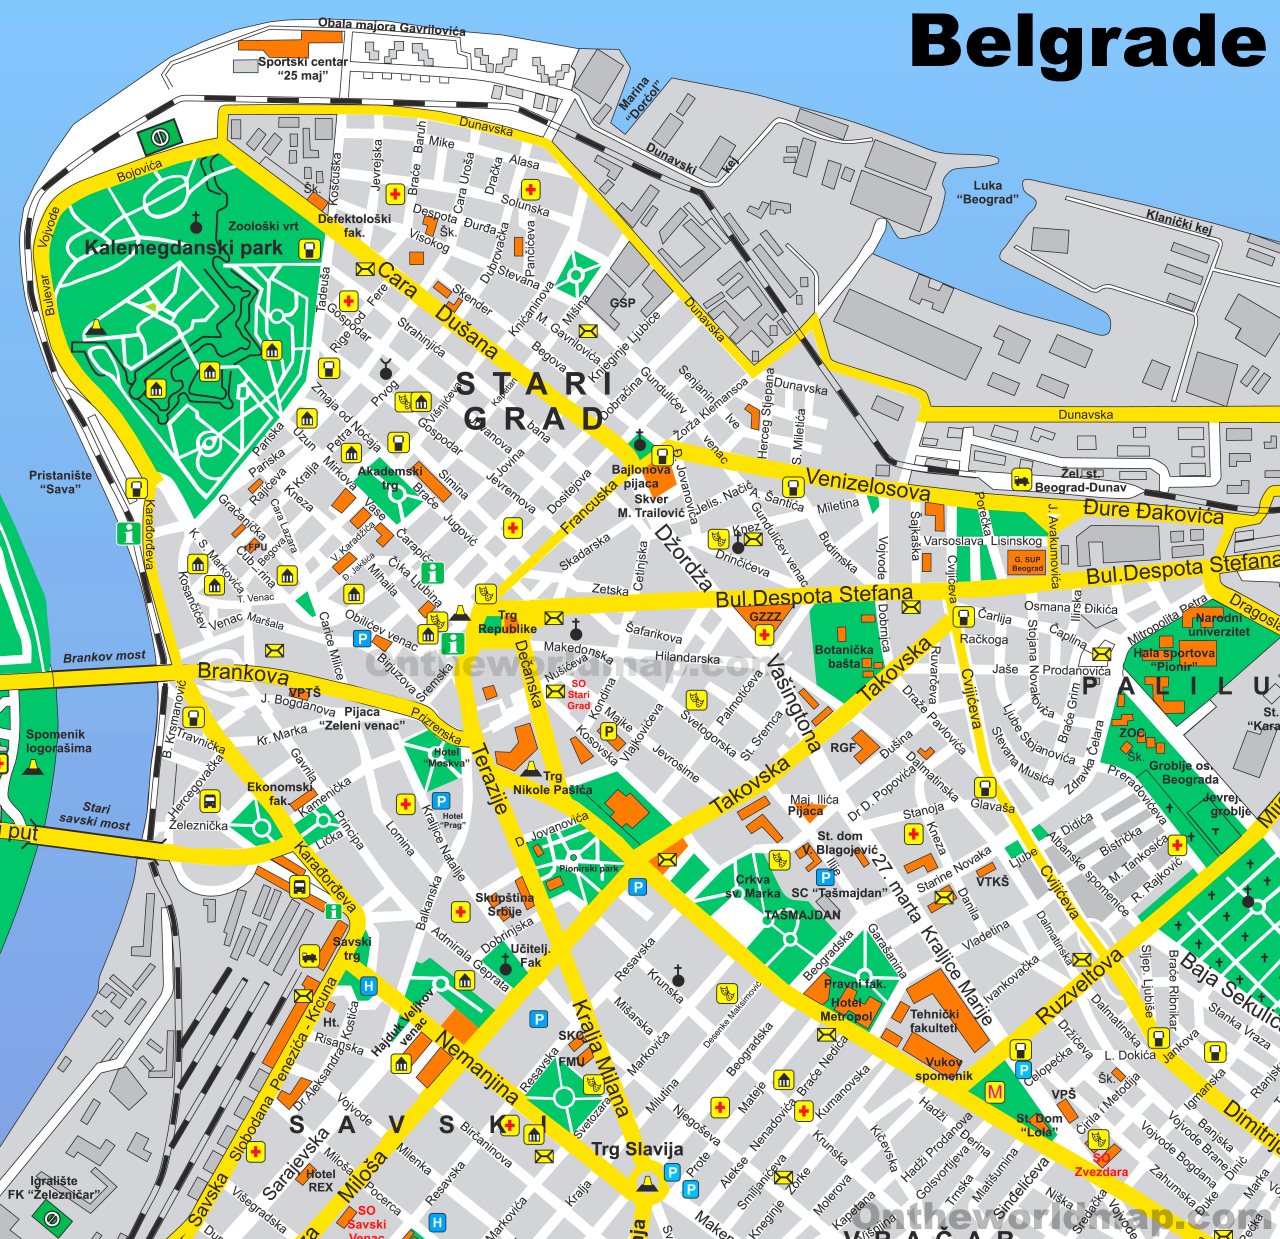 belgrade tourist attractions map